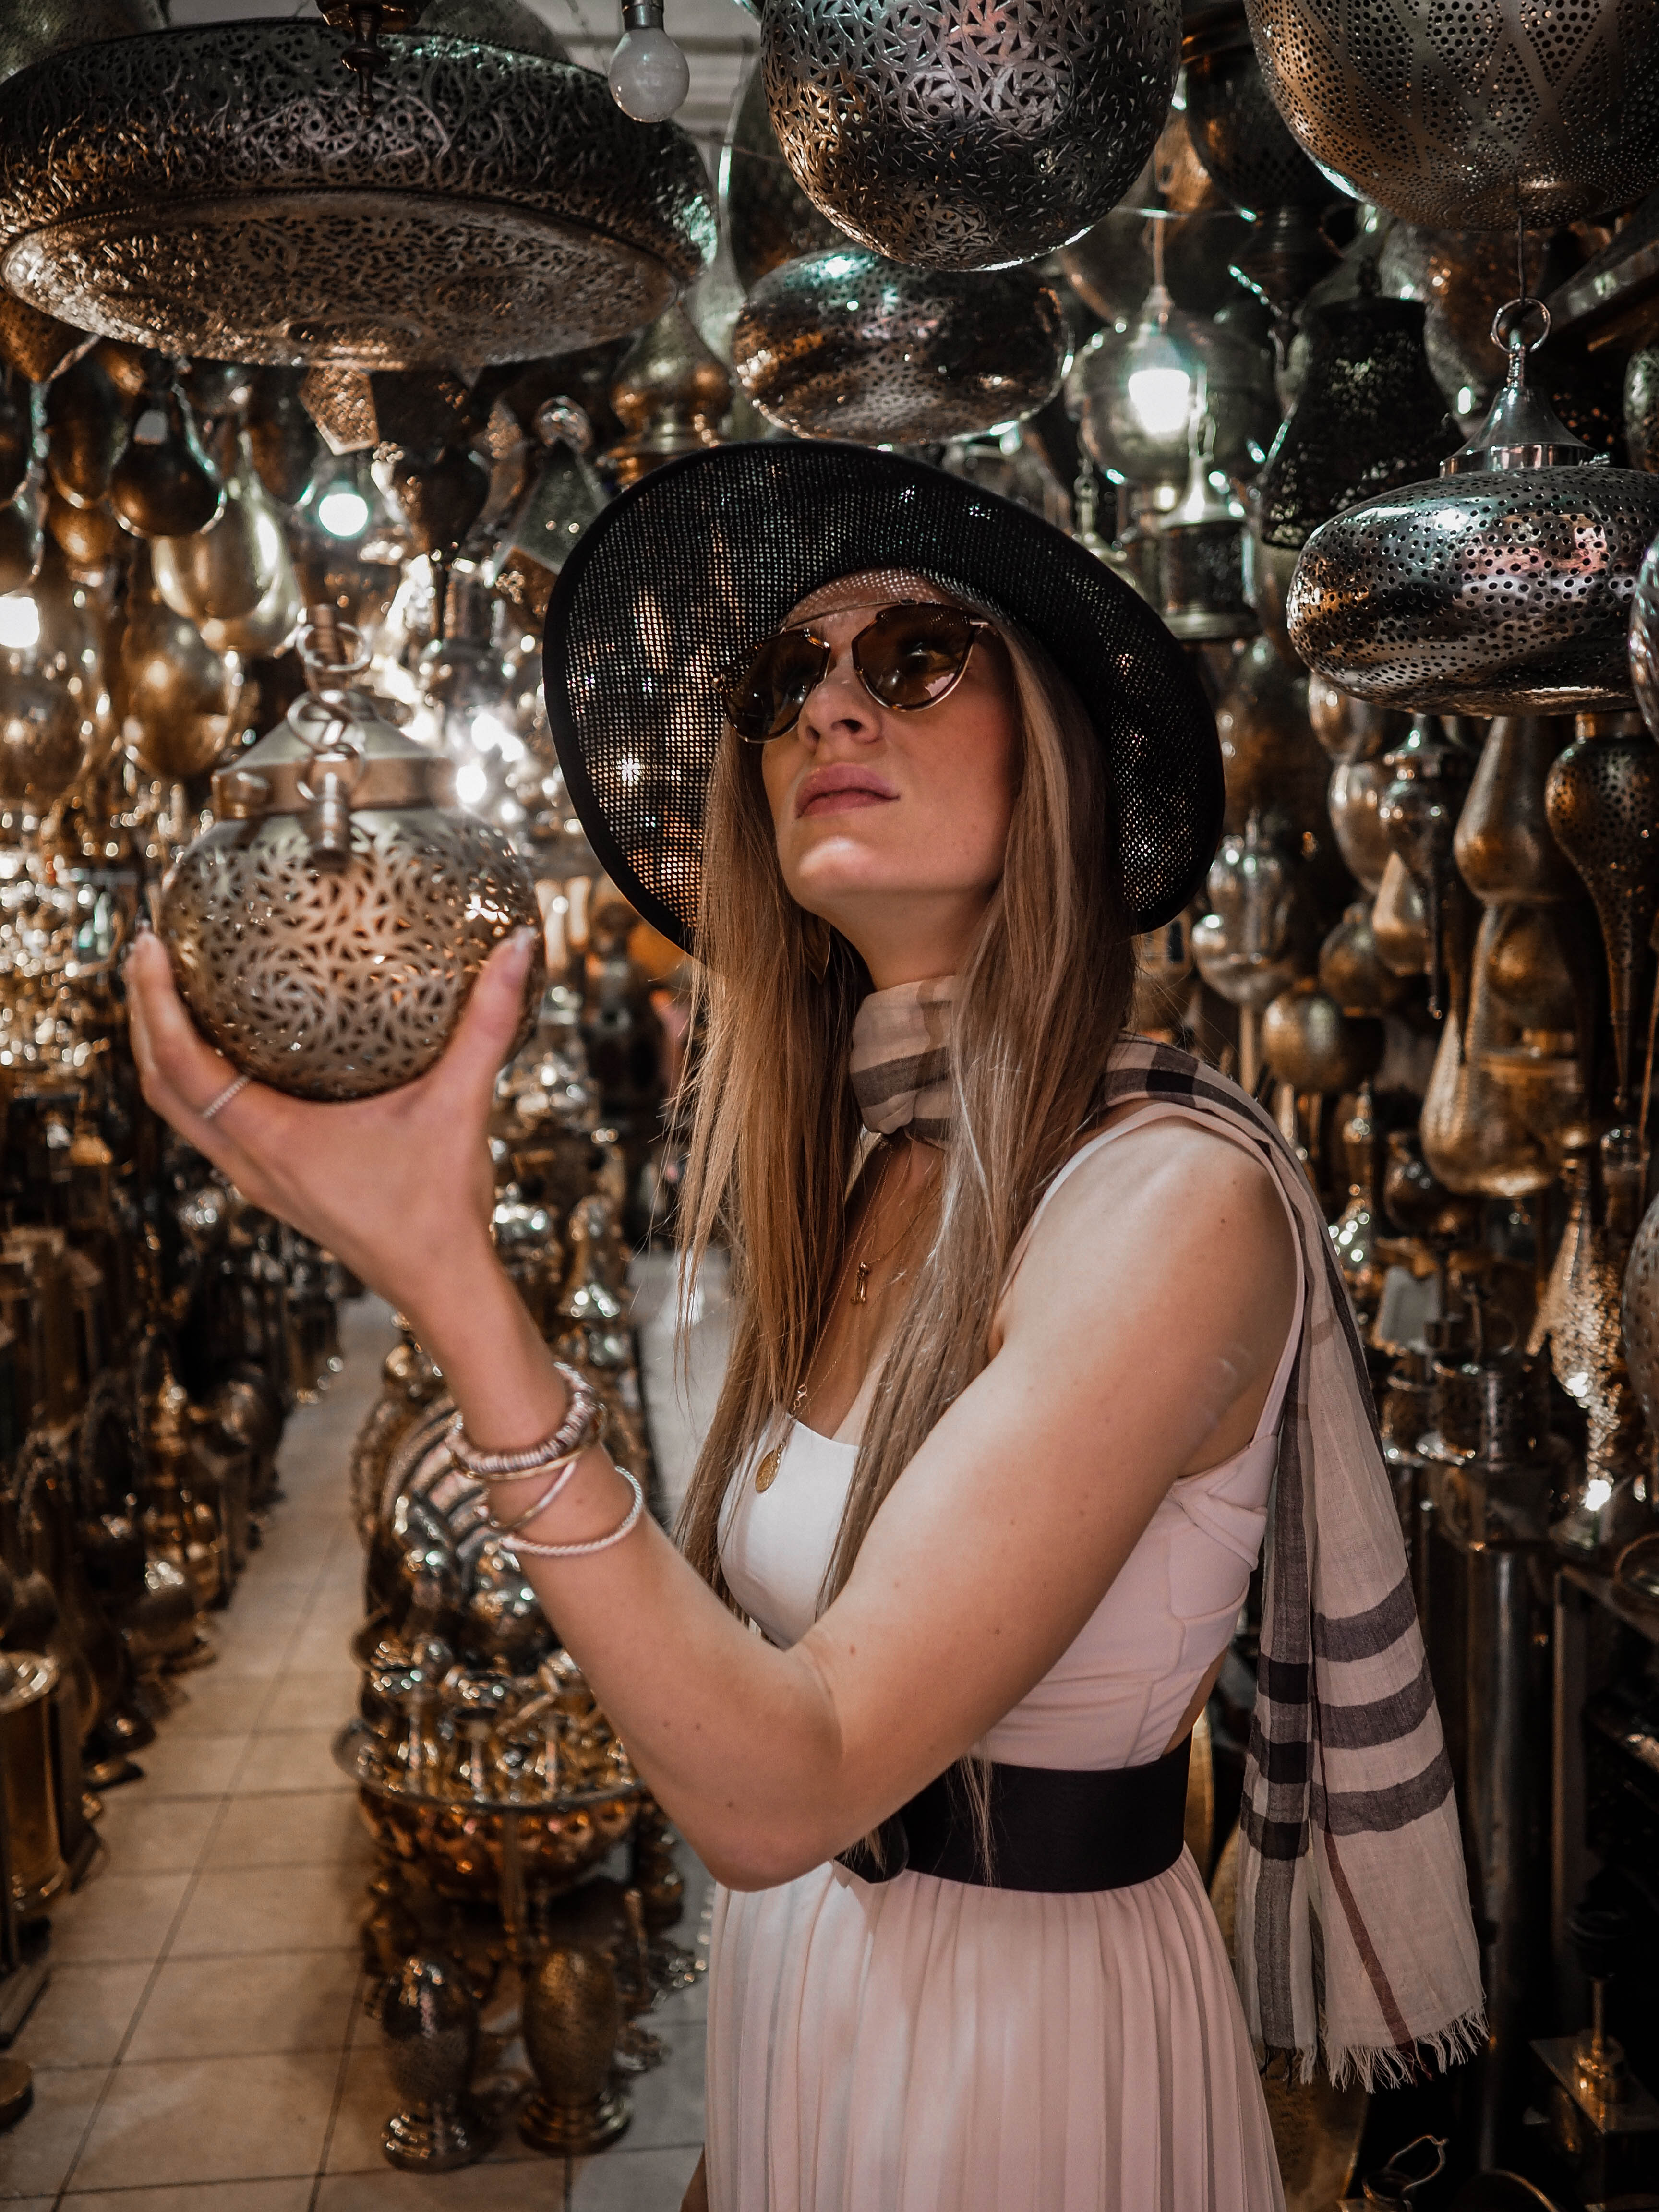 MON MODE | Fashion Blogger | Fashion Blog | Morocco Guide | Morocco Must See | Morocco Markets | Marrakech Soukh